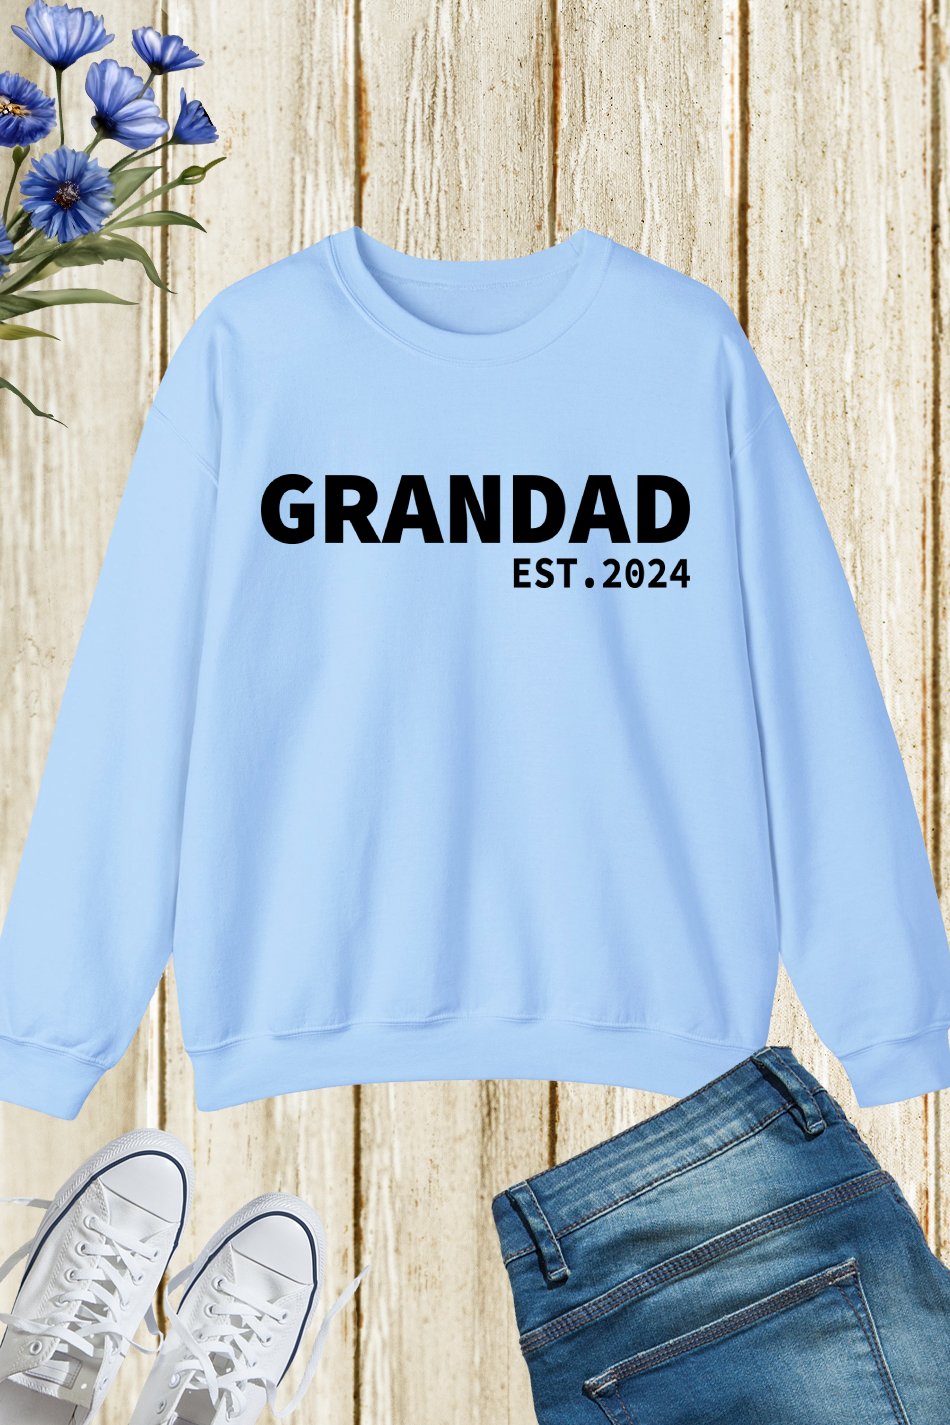 Grandpa Grandad Est 2024 Sweatshirt grandparent  Sweatshirt